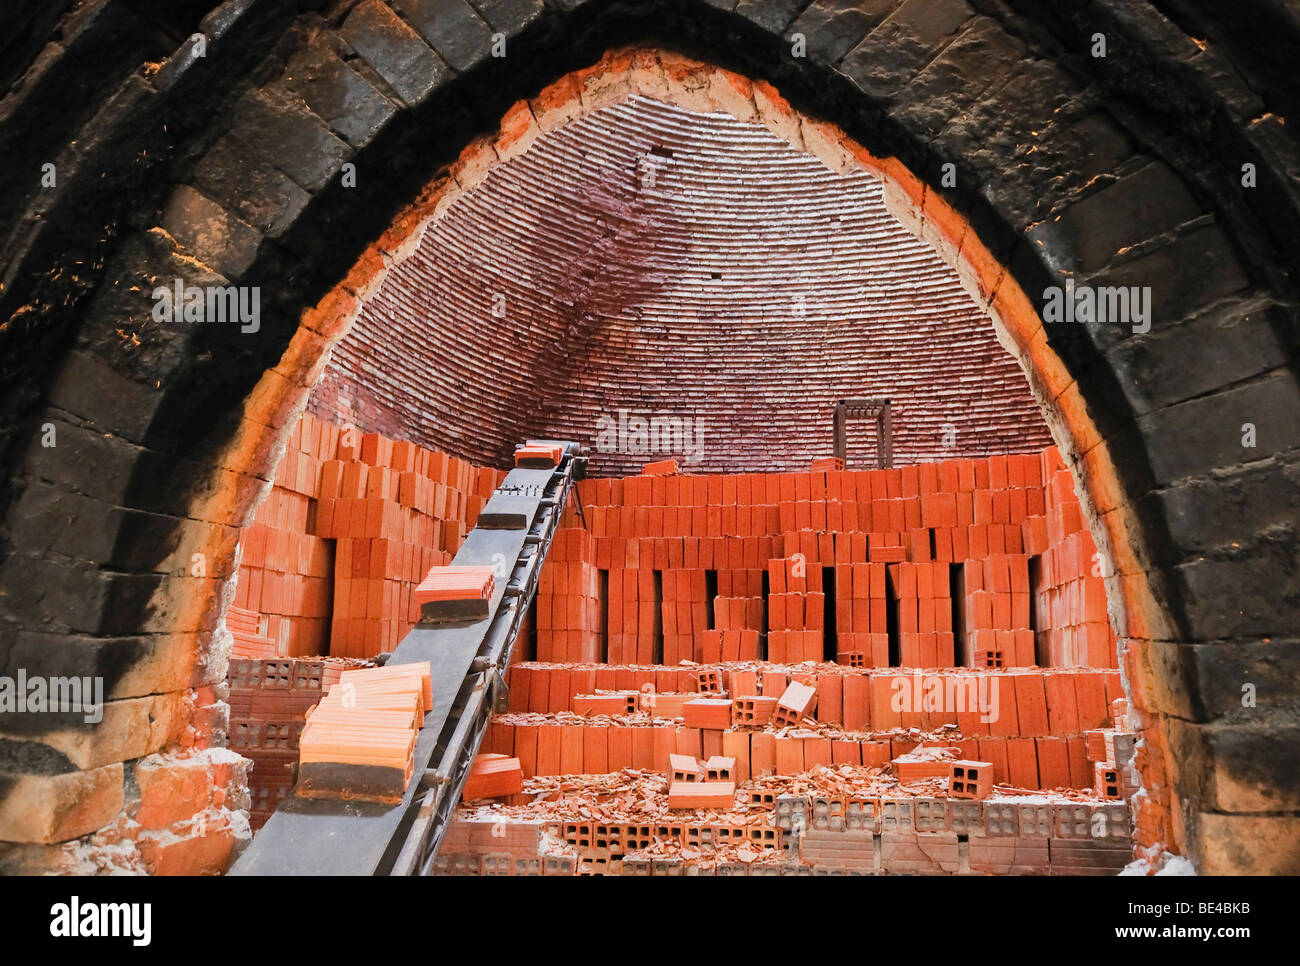 Conveyor belt with bricks in a kiln, Vinh Long, Mekong Delta, Vietnam, Asia Stock Photo